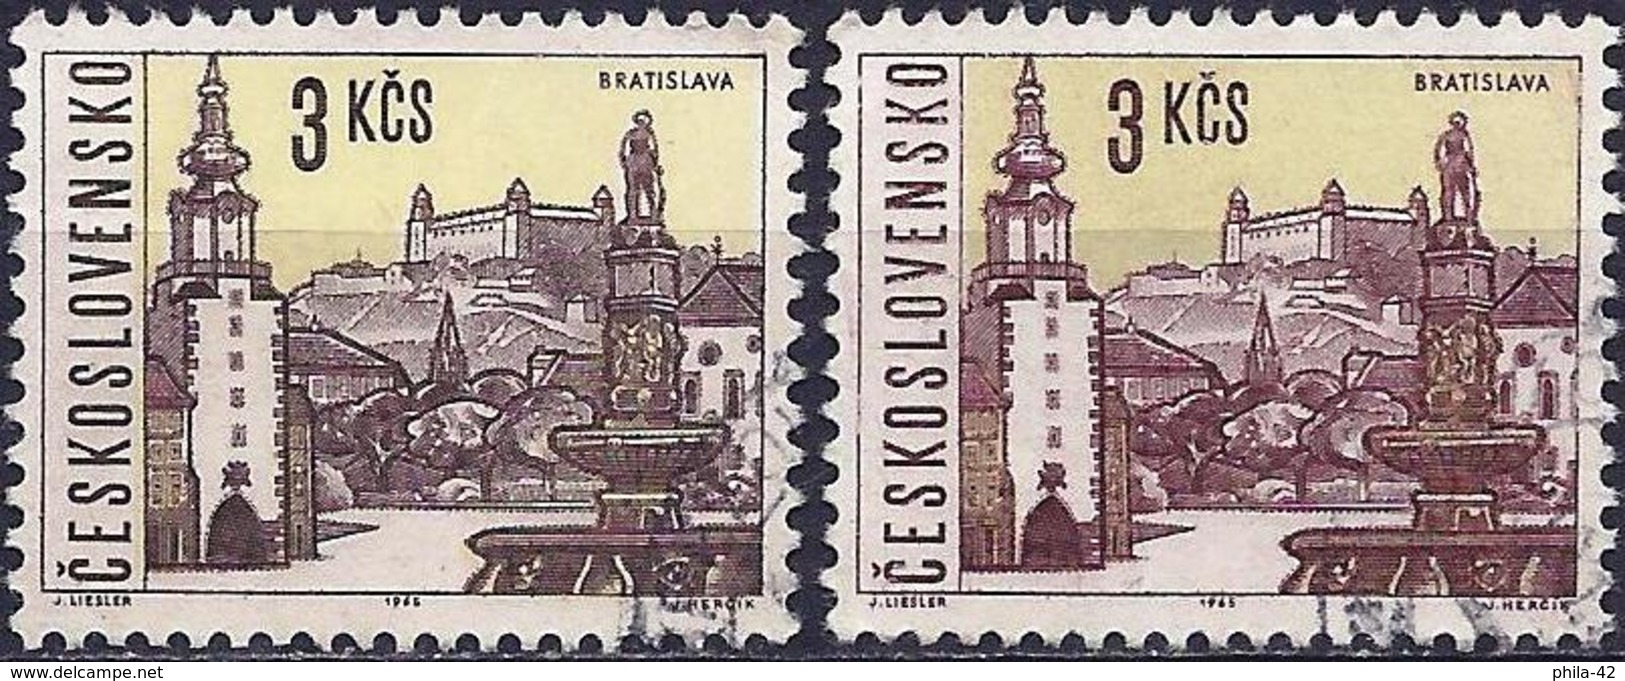 Czechoslovakia 1965 - Bratislava ( Mi 1581x - YT 1446 ) 2 Shades Of Color - Errors, Freaks & Oddities (EFO)